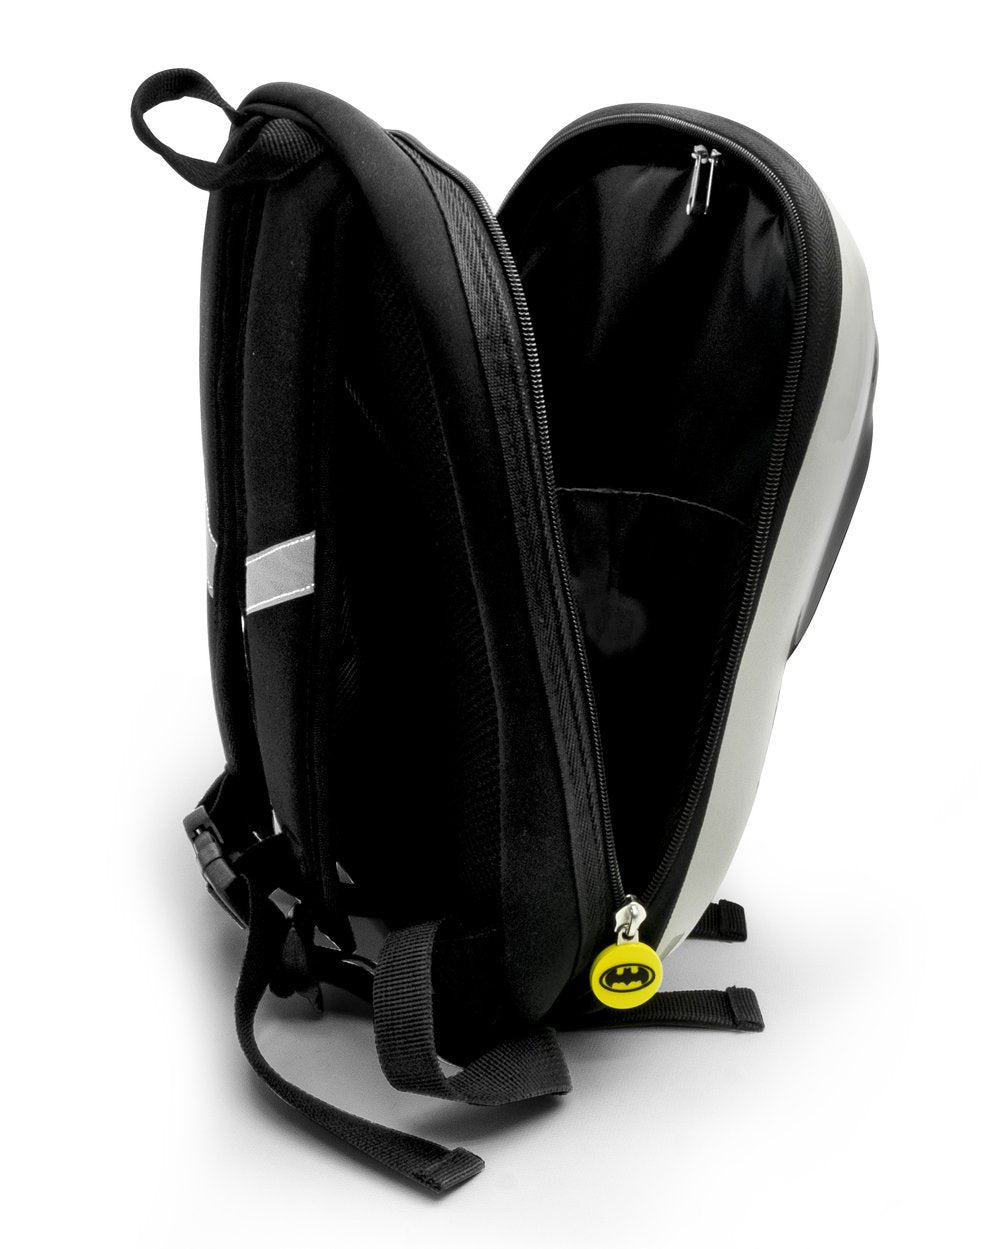 Travelmall Kid's Backpack Batman Edition